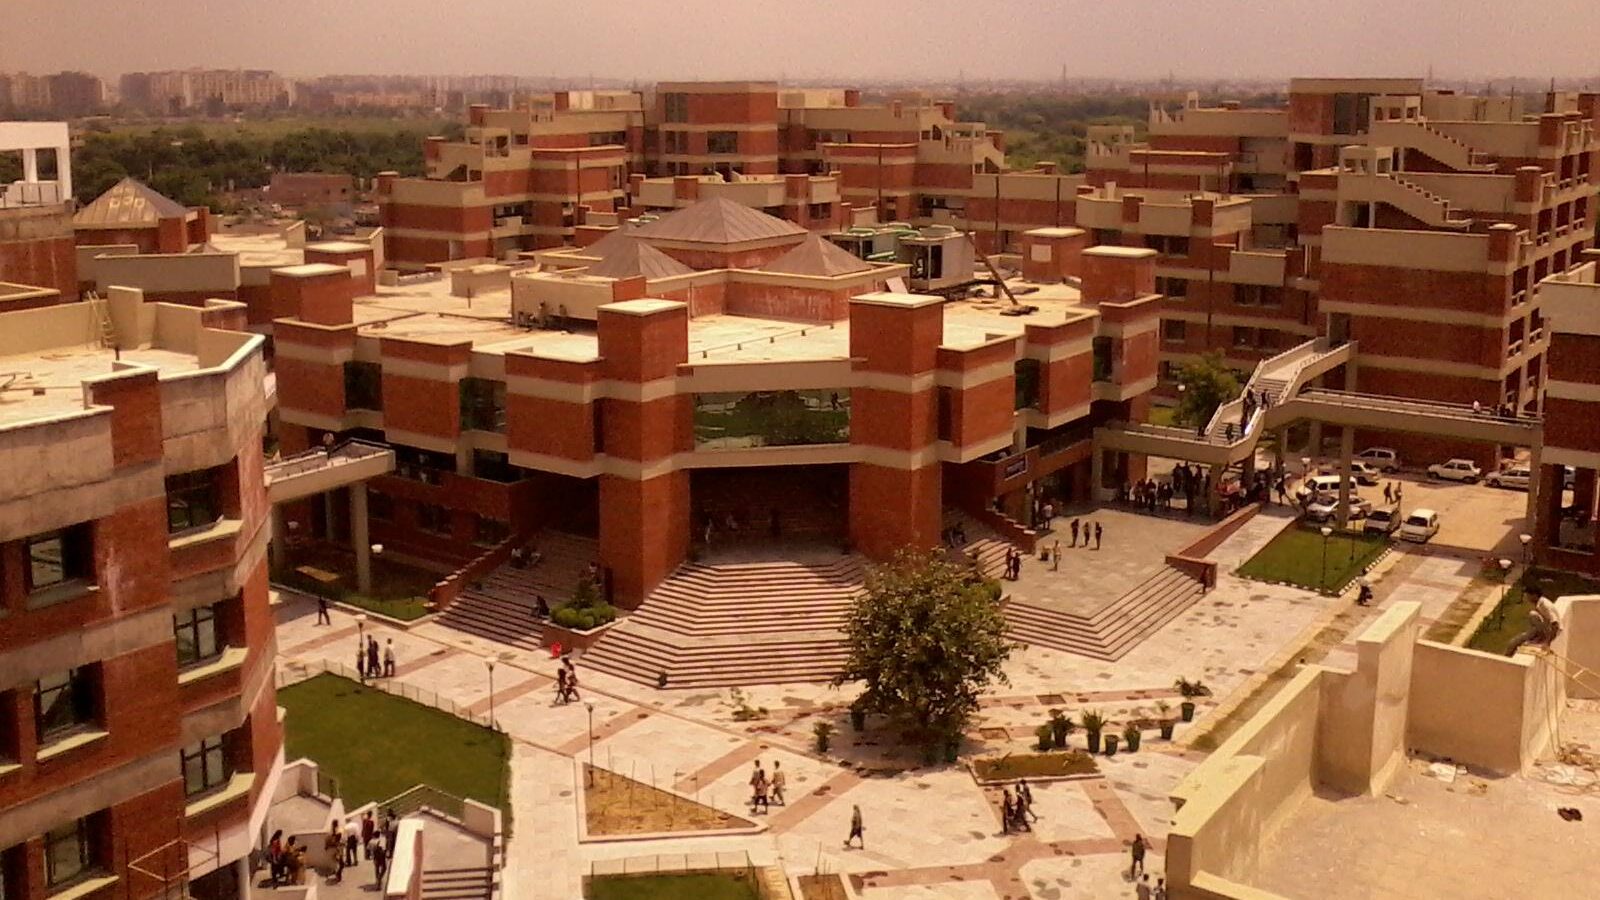 University School of Information Technology